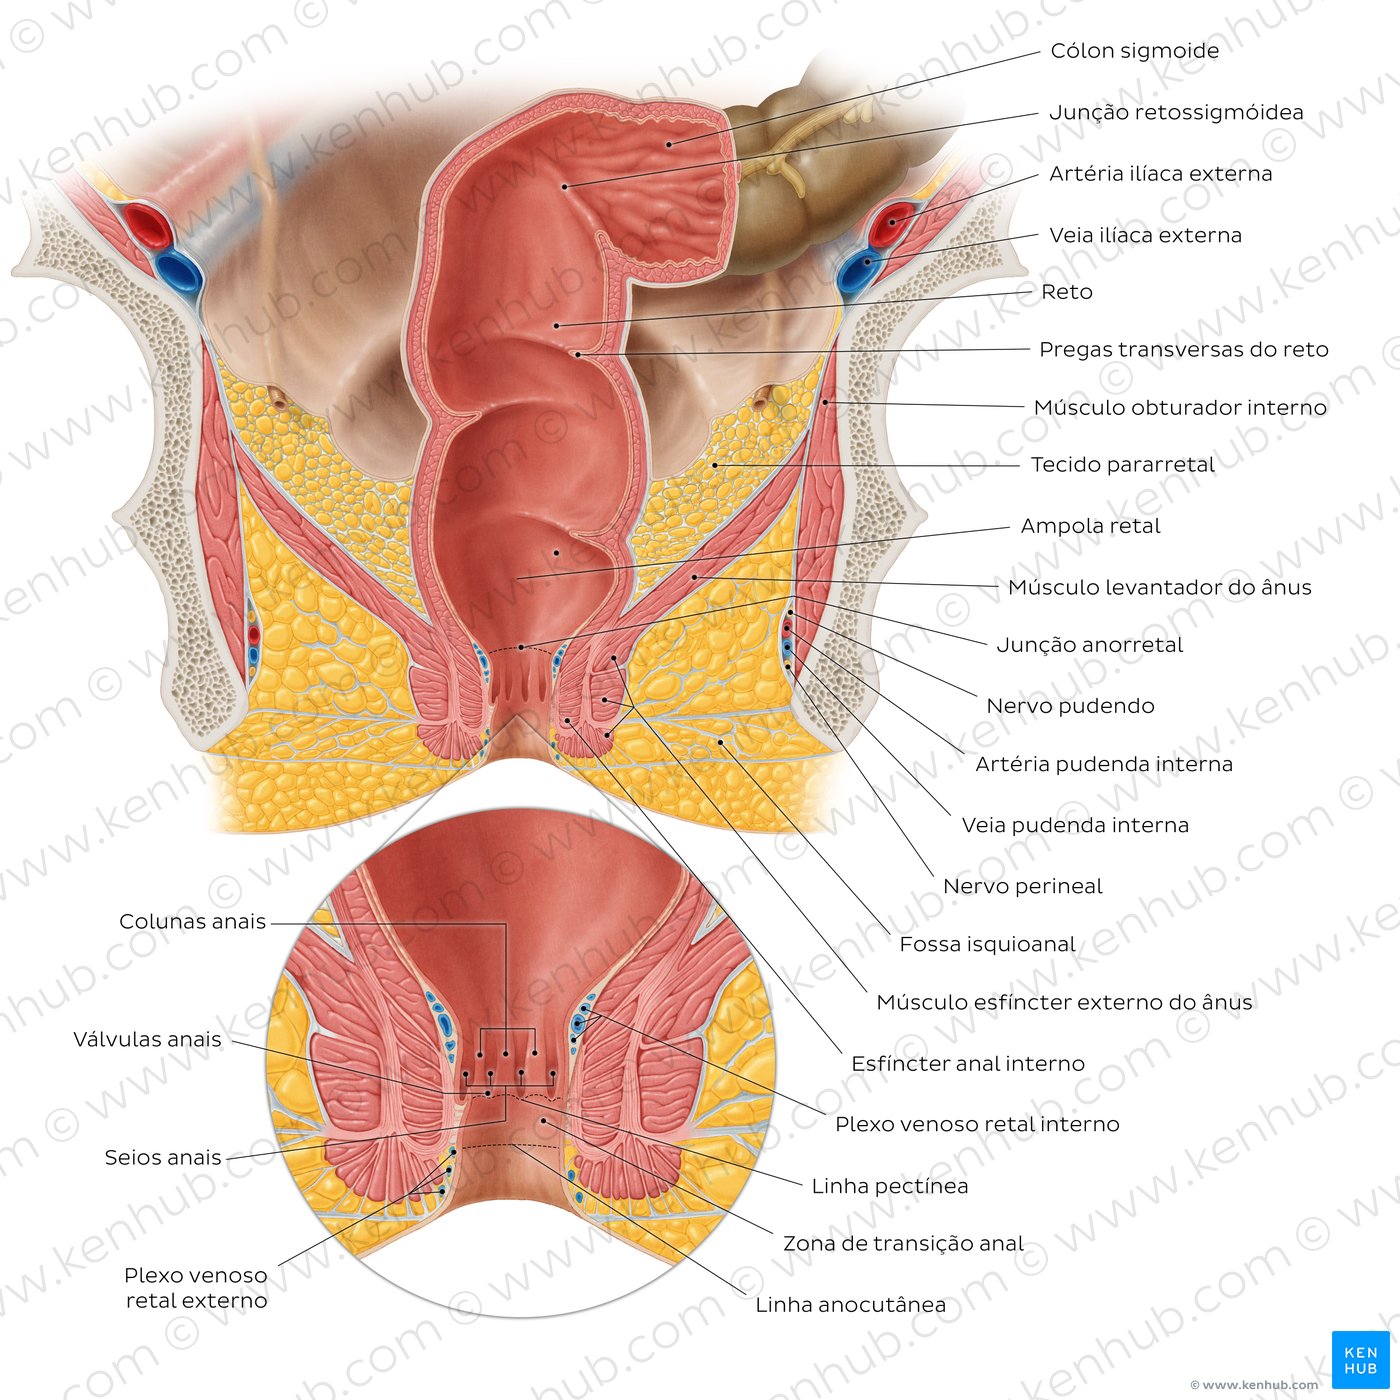 Anatomia do reto e canal anal - vista coronal